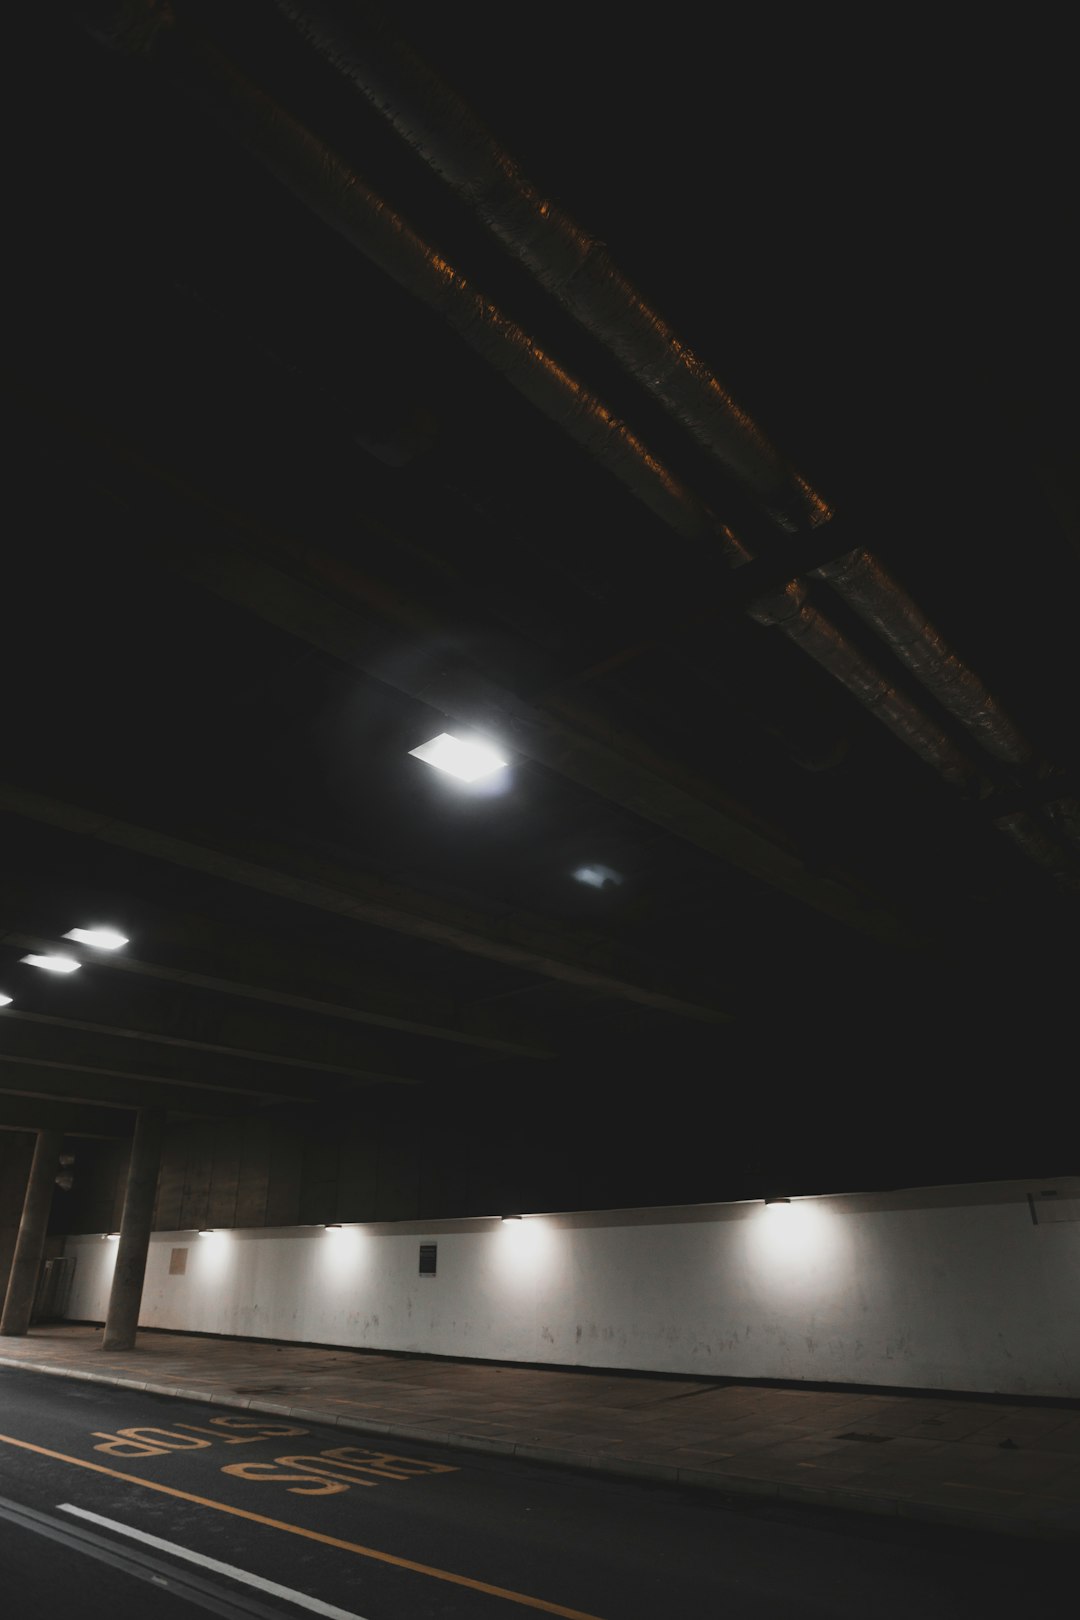 white ceiling light turned on during nighttime